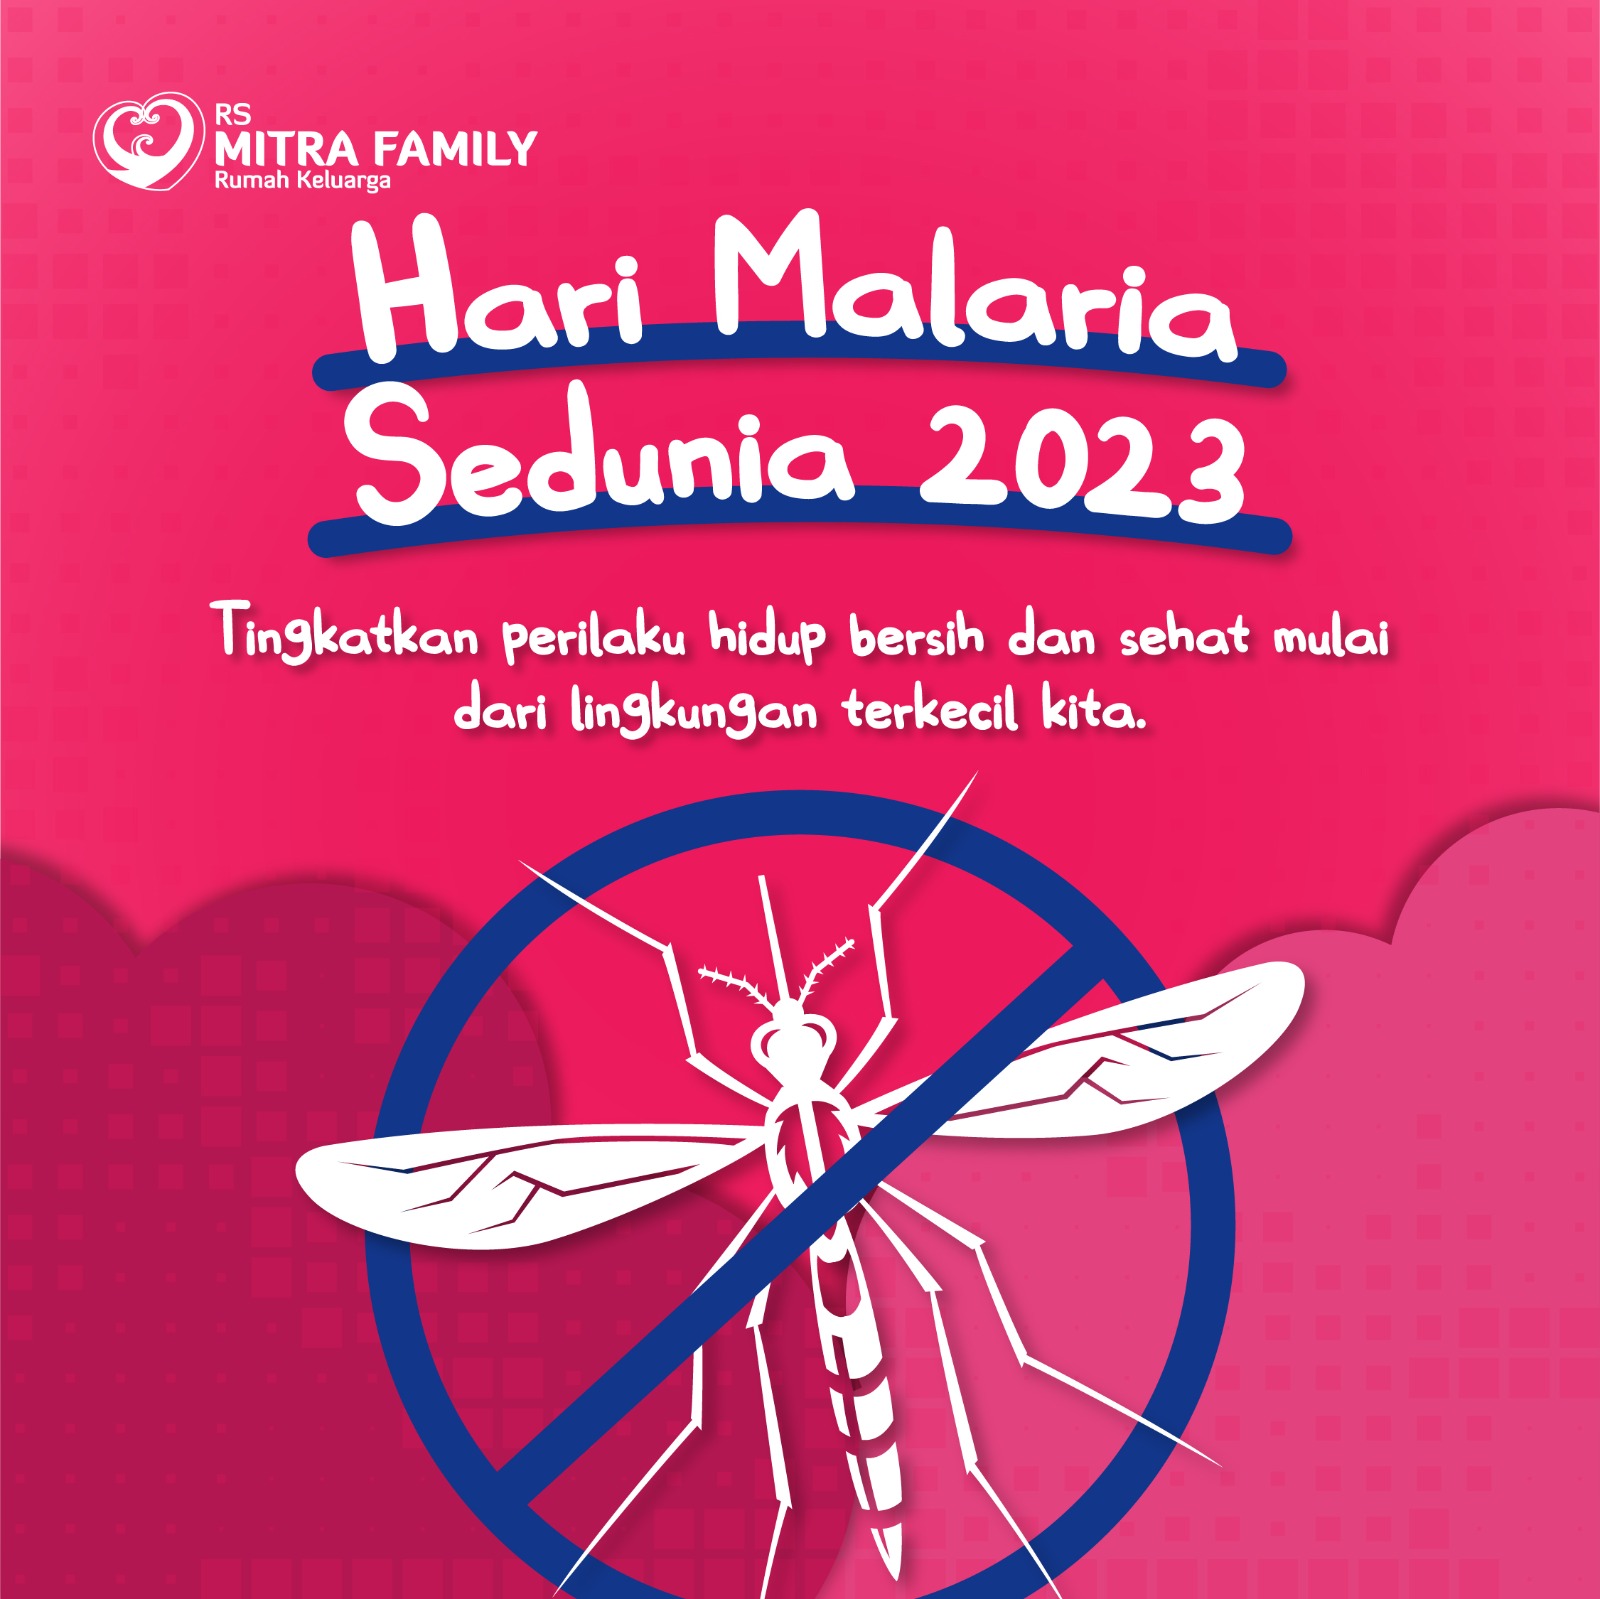 hari-malaria-sedunia